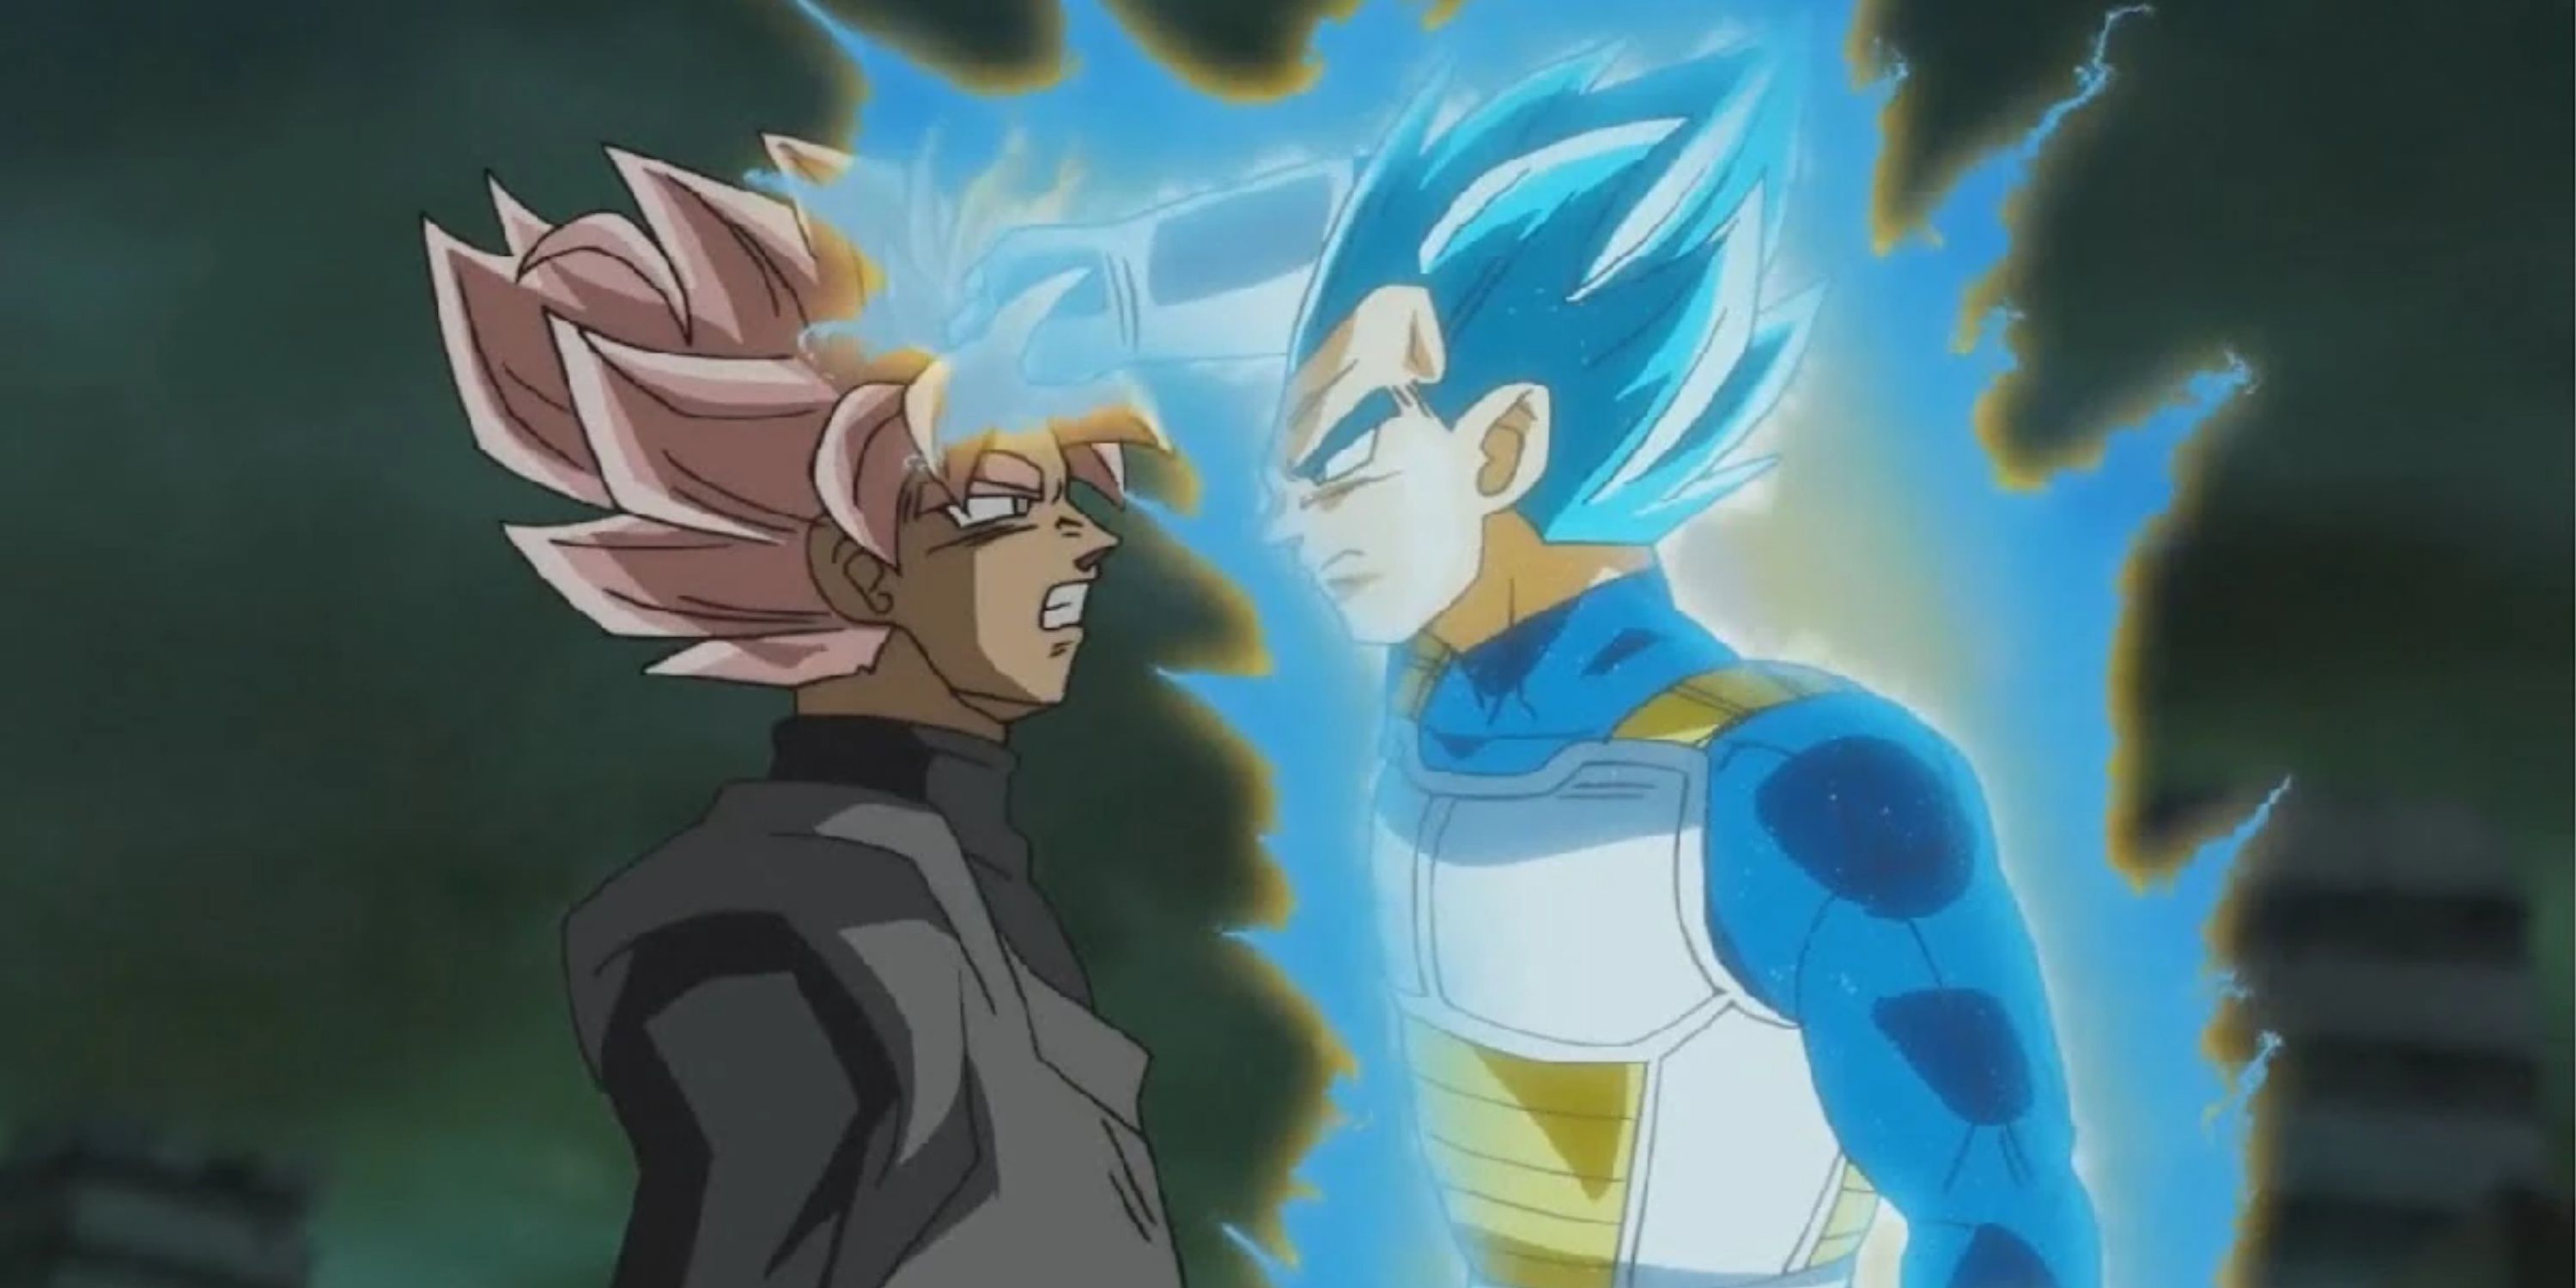 Super Saiyan Blue Vegeta lecturing Goku Black about what it means to be a true Saiyan